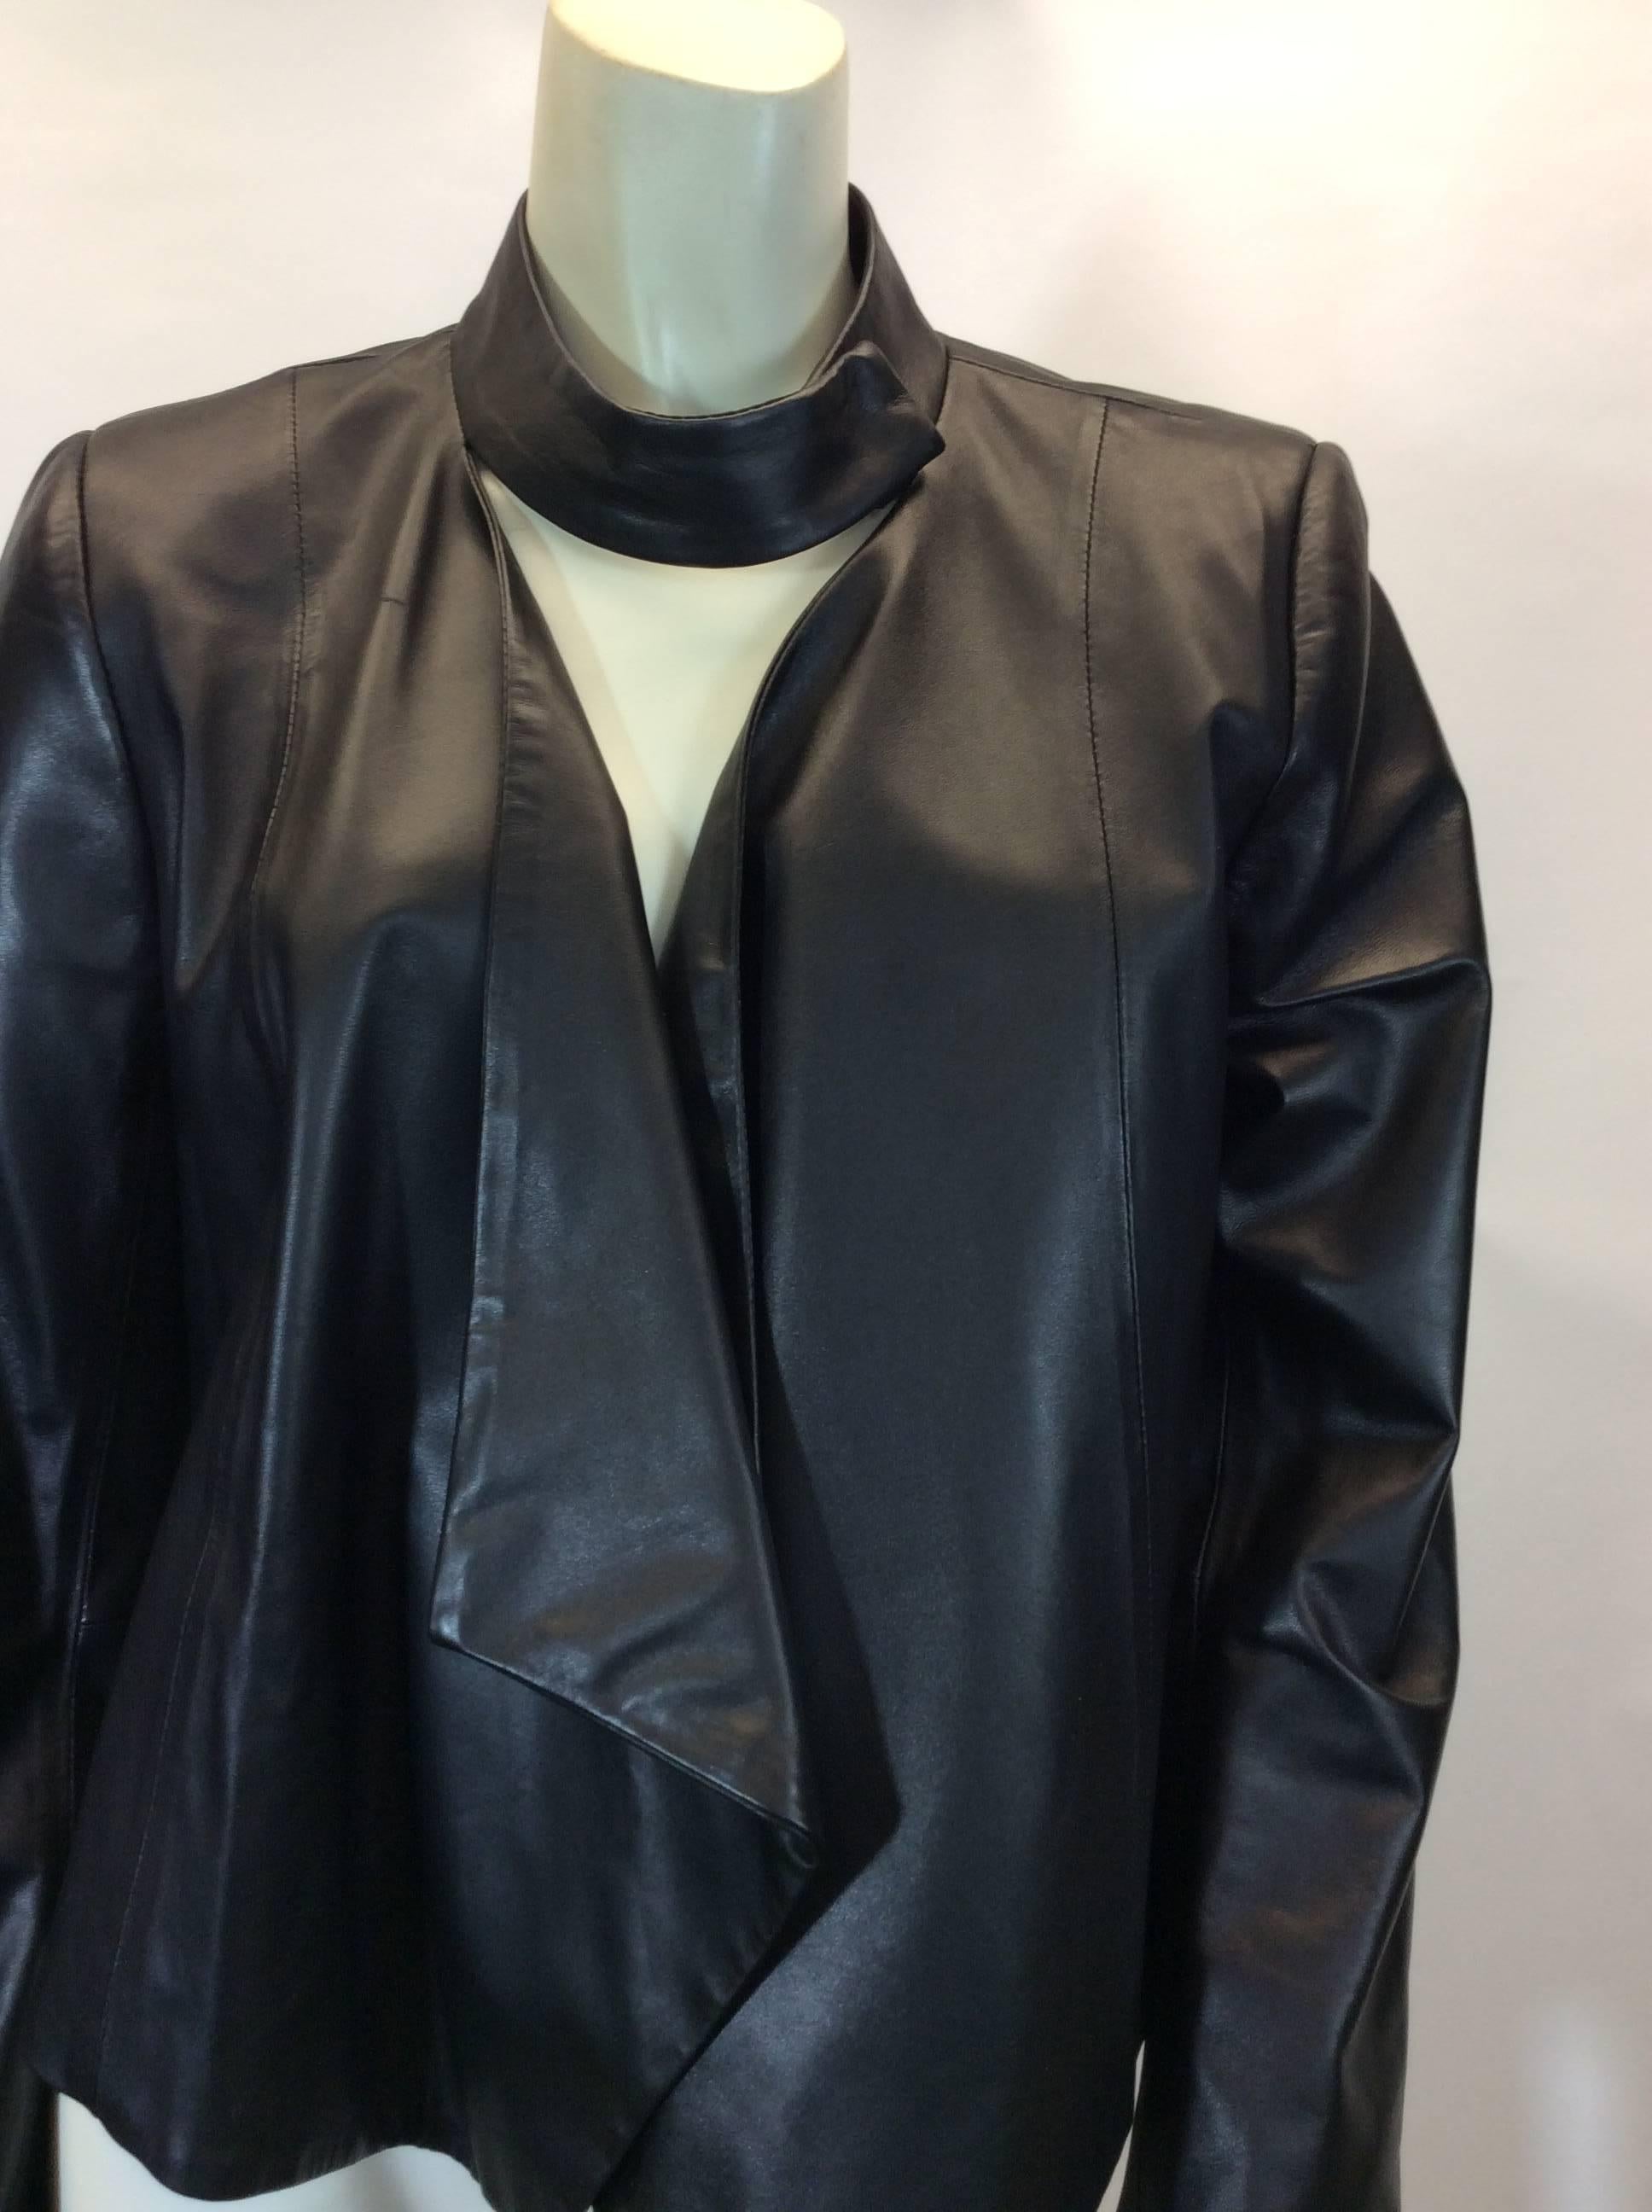 Intermix Black Leather Cropped Jacket
Size medium
Snap trend collar
$350
